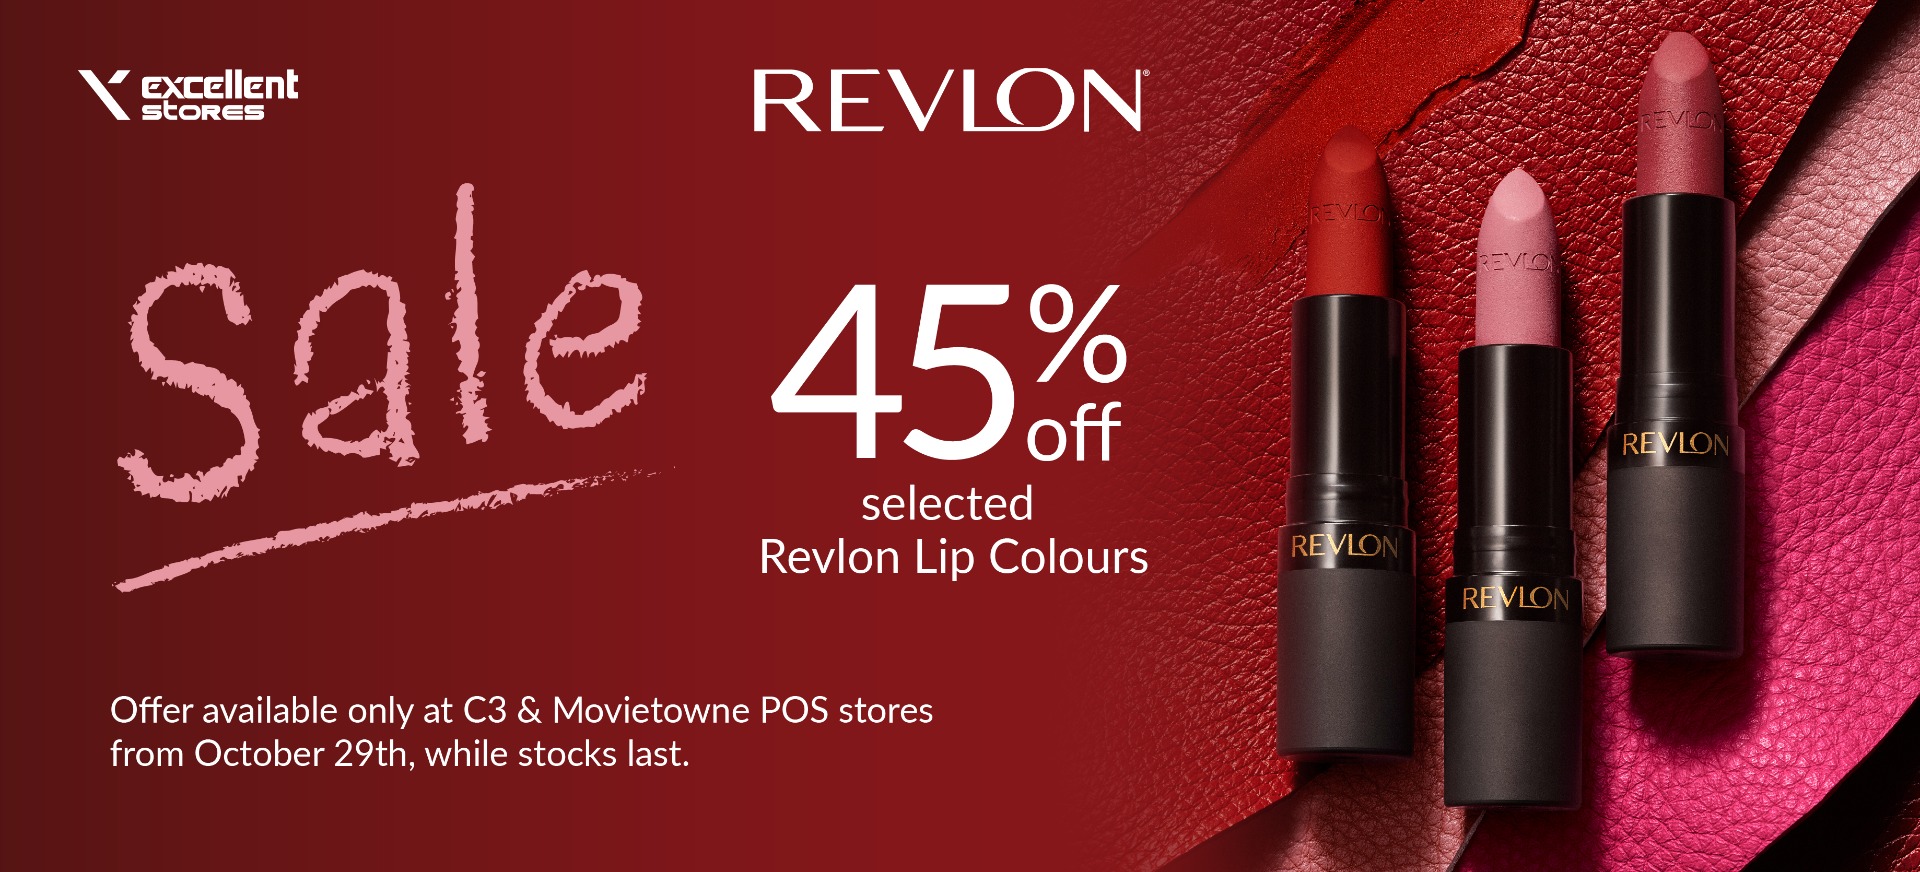 Revlon 45% off Promo